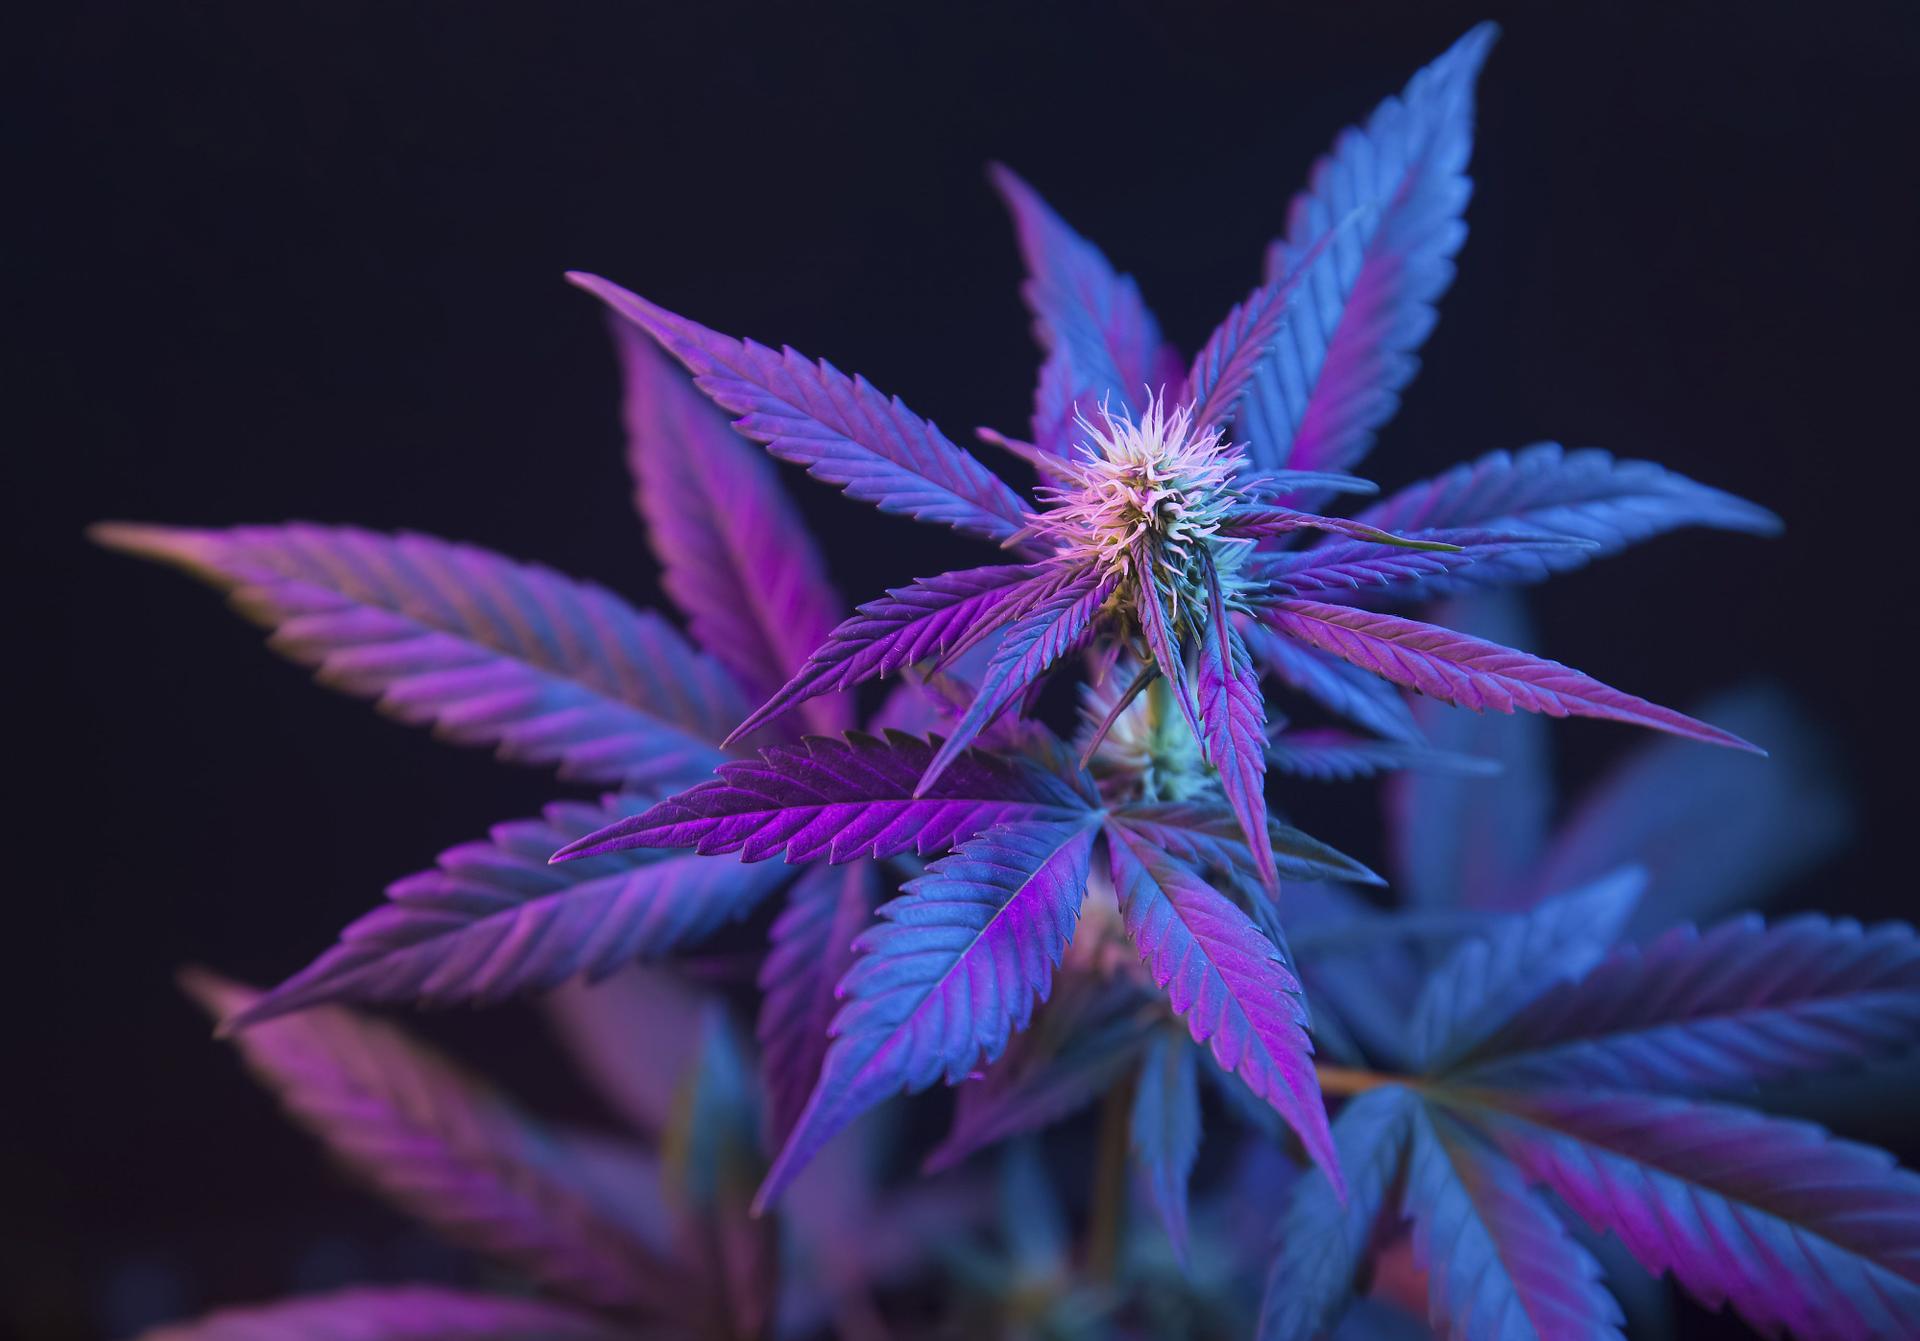 Purplish Cannabis Buds on a Plant